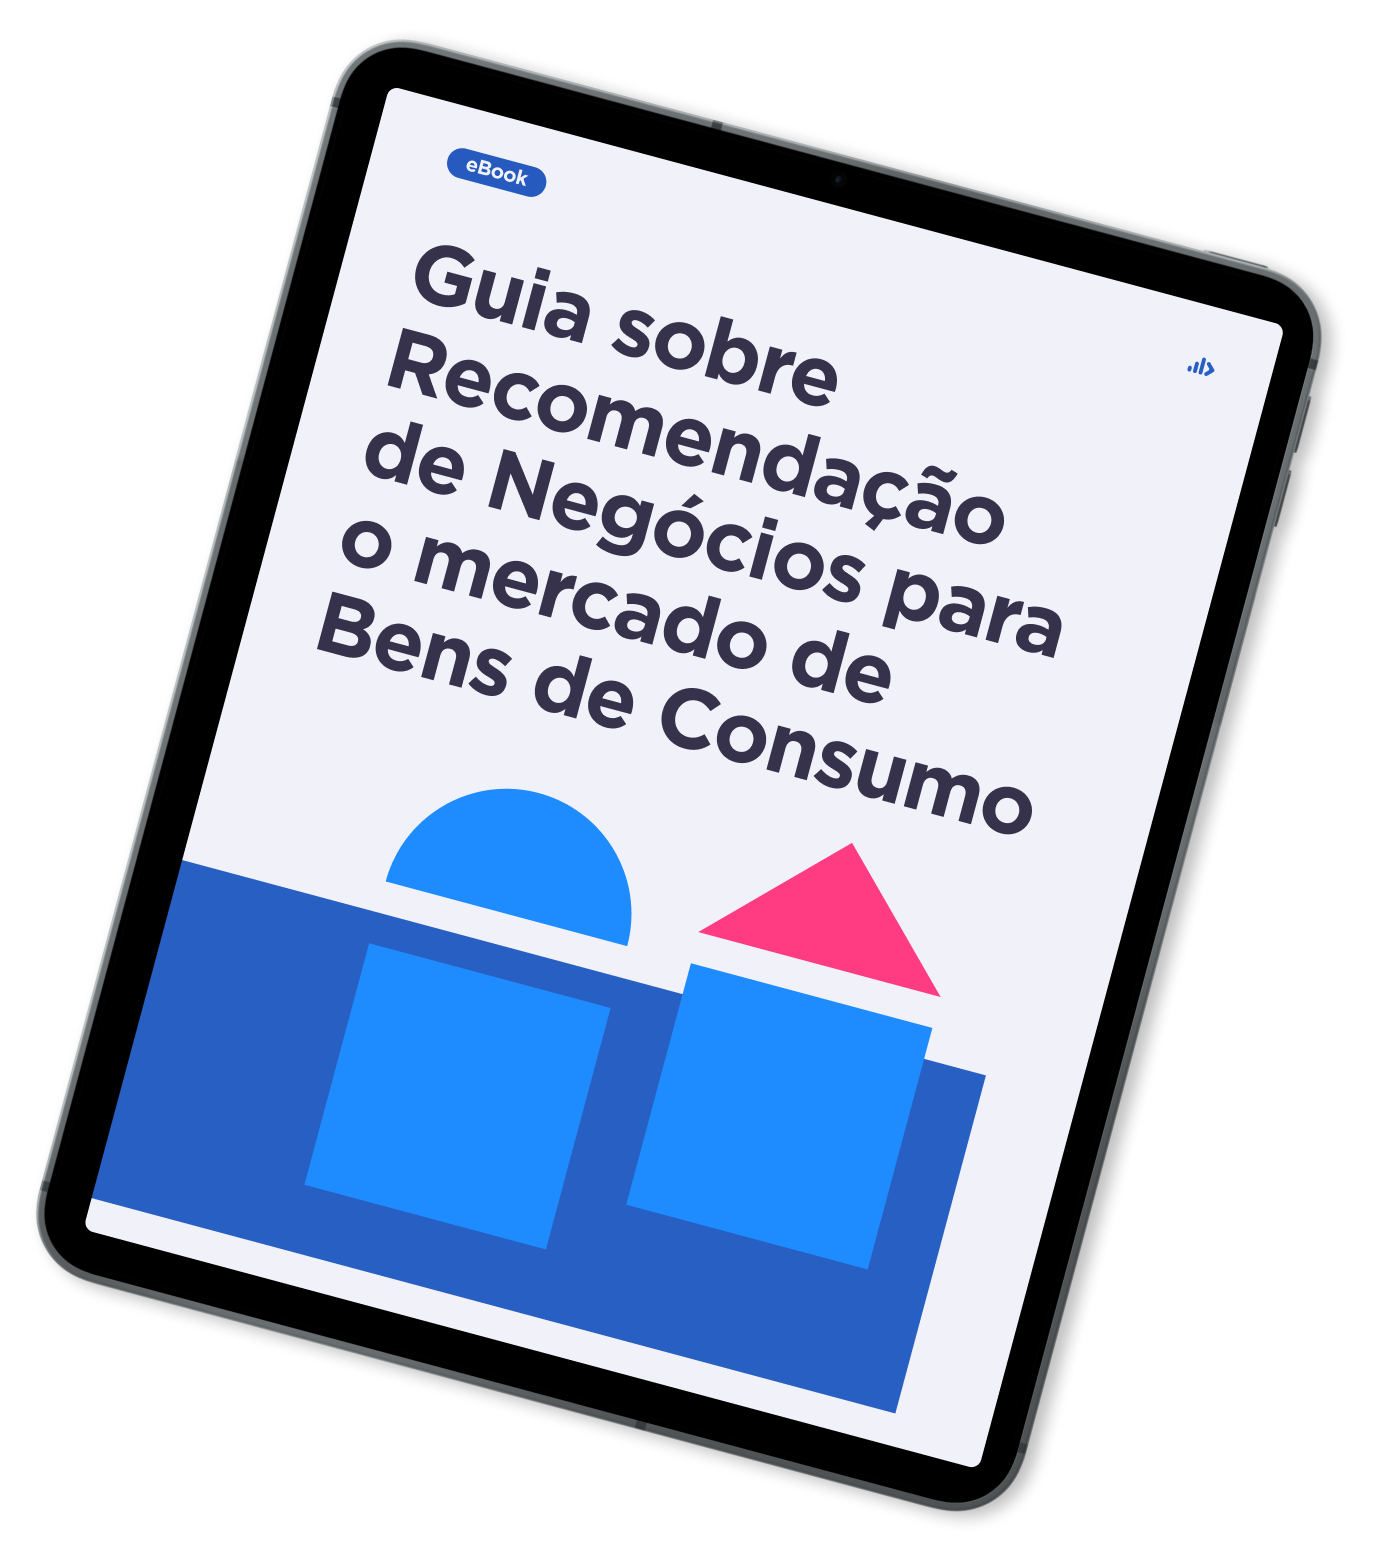 Mockup LP Ebook - guia sobre recomendacao de negócios para bens de consumo